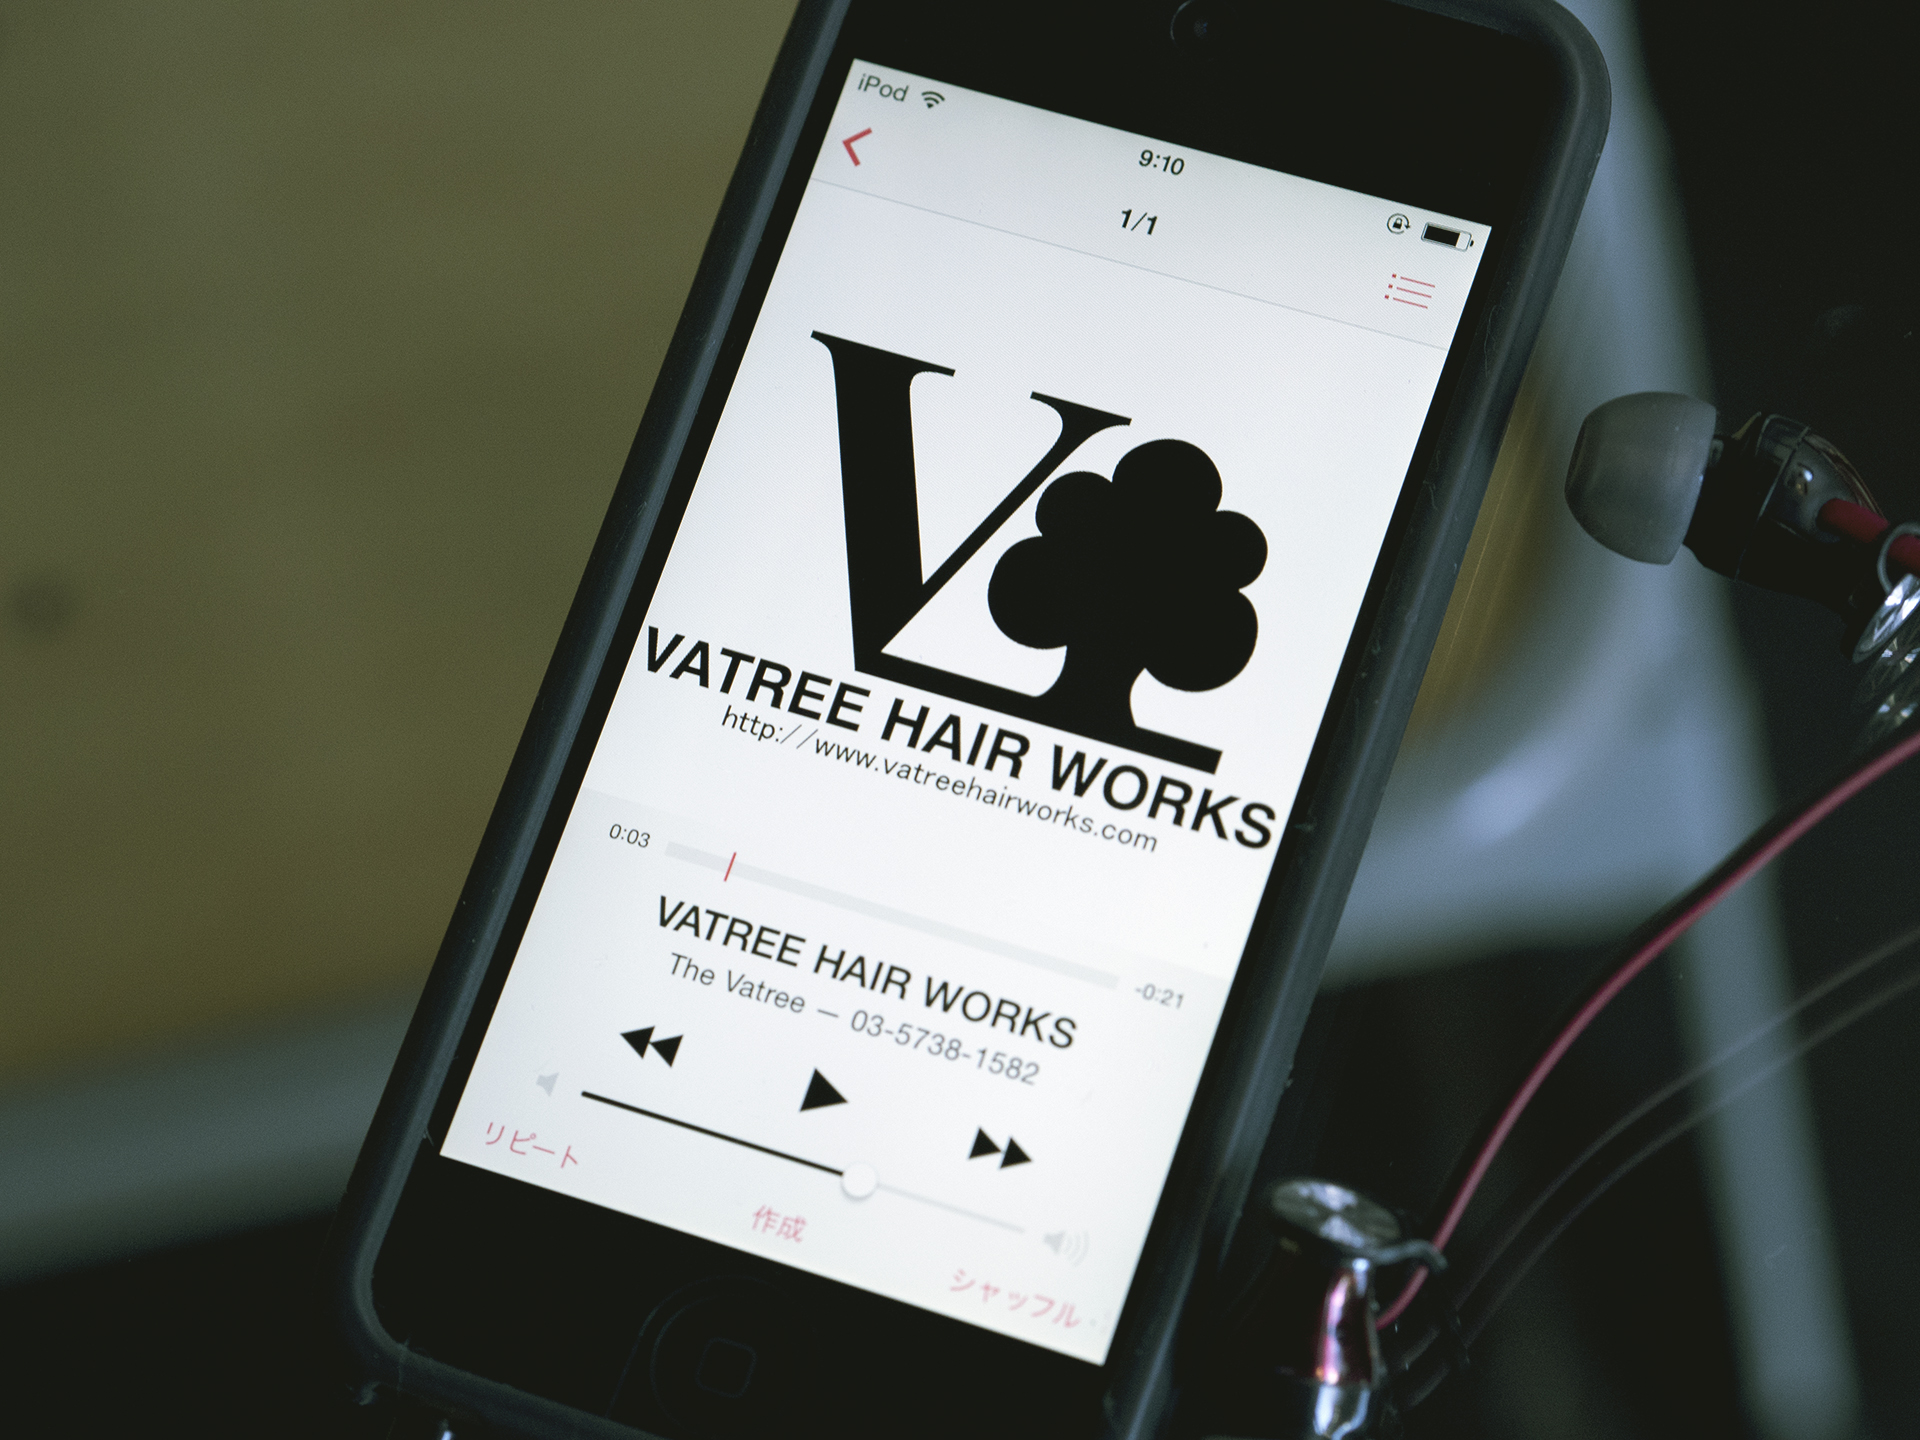 vatree hair worksと写し出されたiPod画面